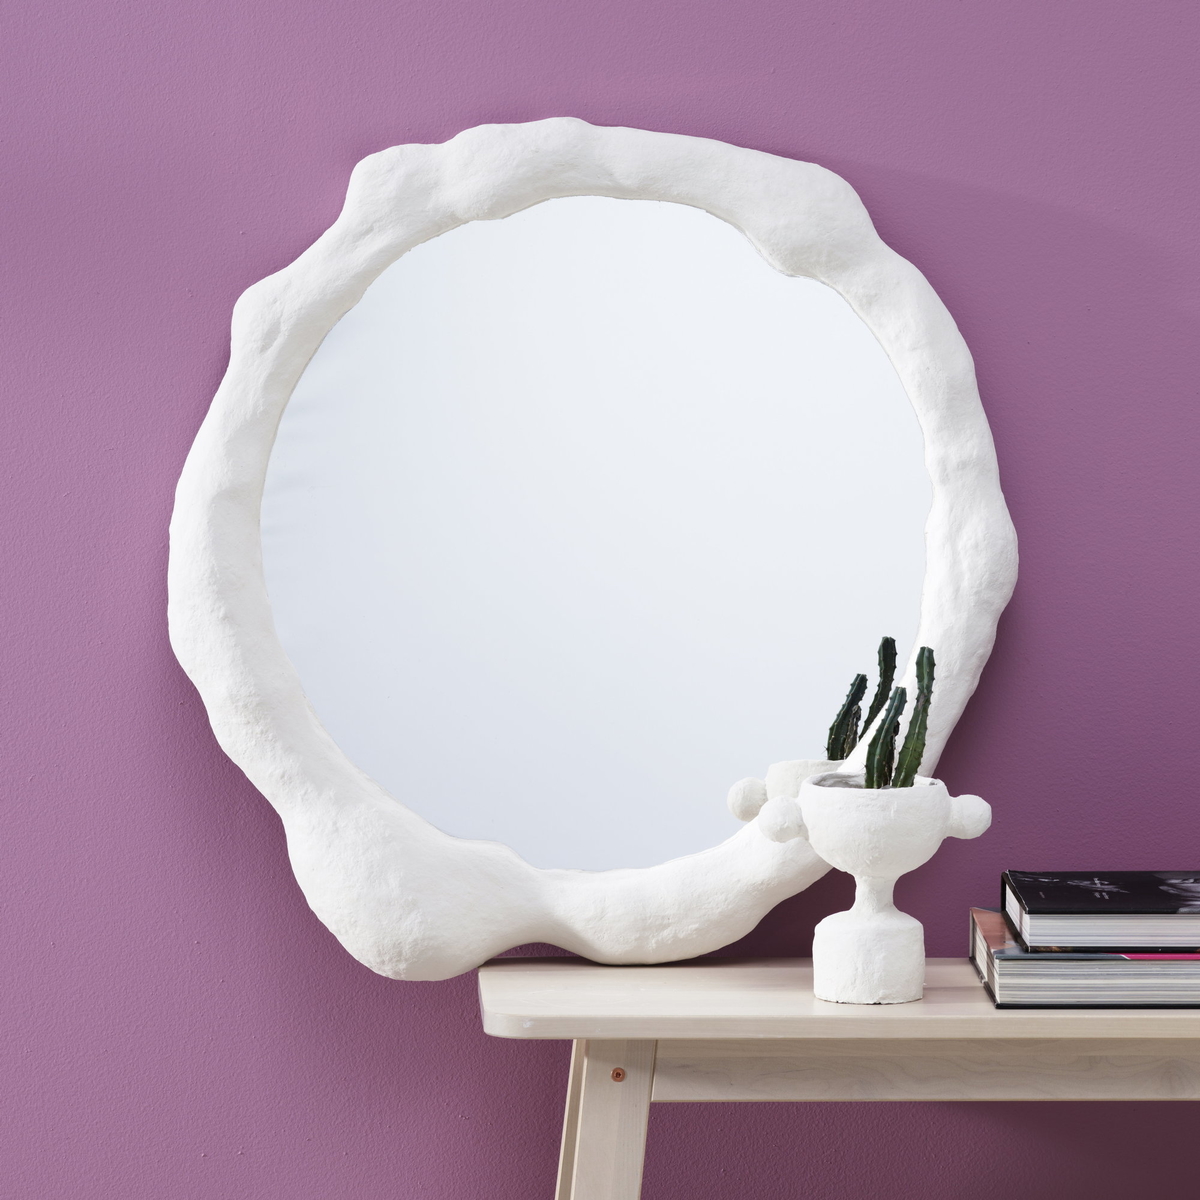 Dekorera en spegelram med papier-maché